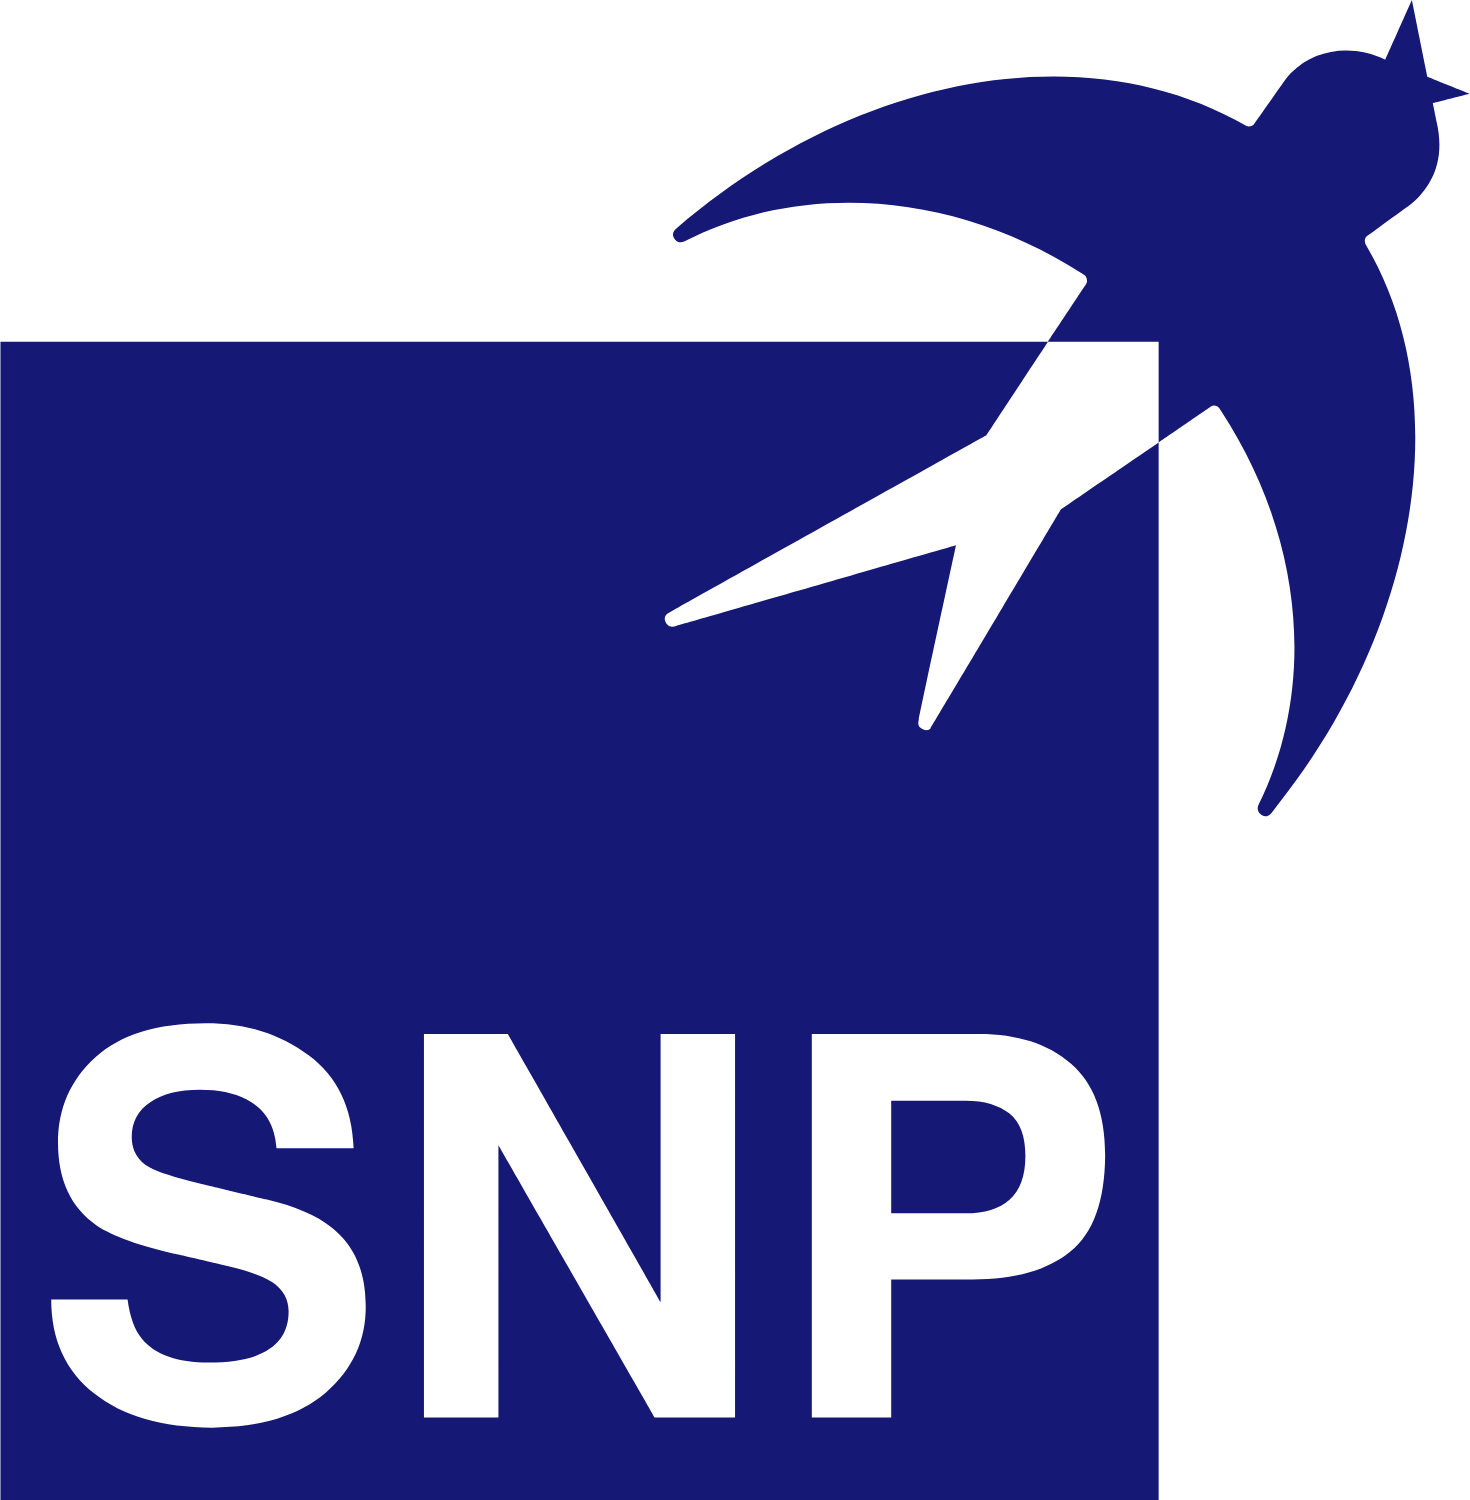 SNP Schneider-Neureither & Partner logo (transparent PNG)